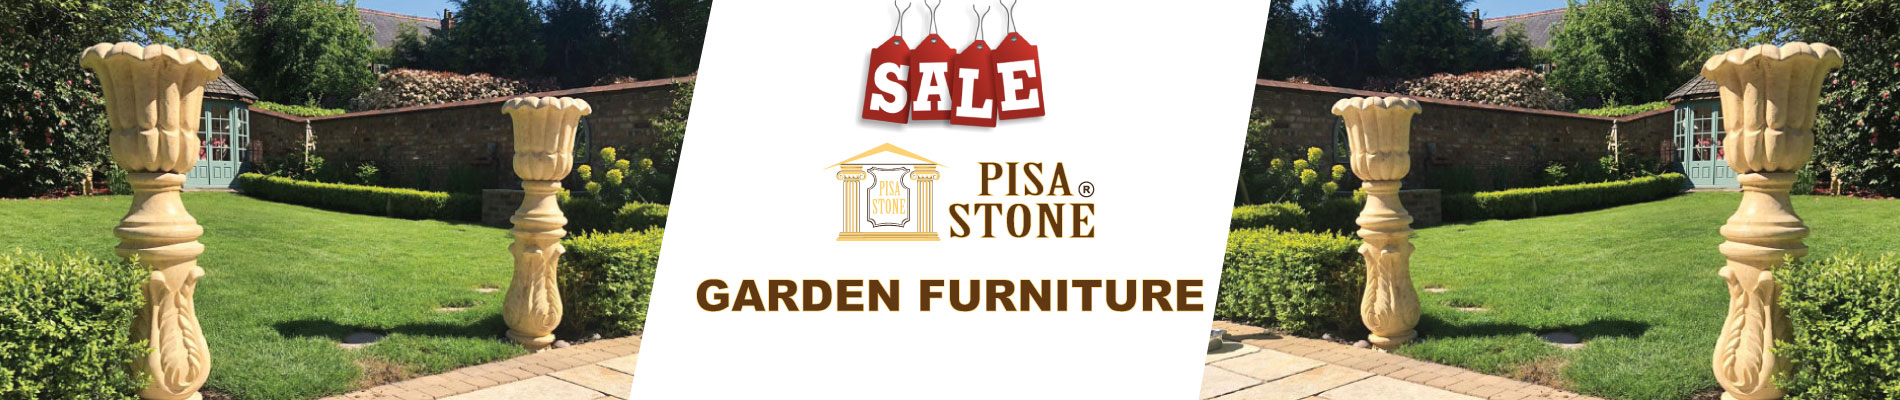 Pisa-Stone®-GARDEN-FURNITURE-urns-planters-vases